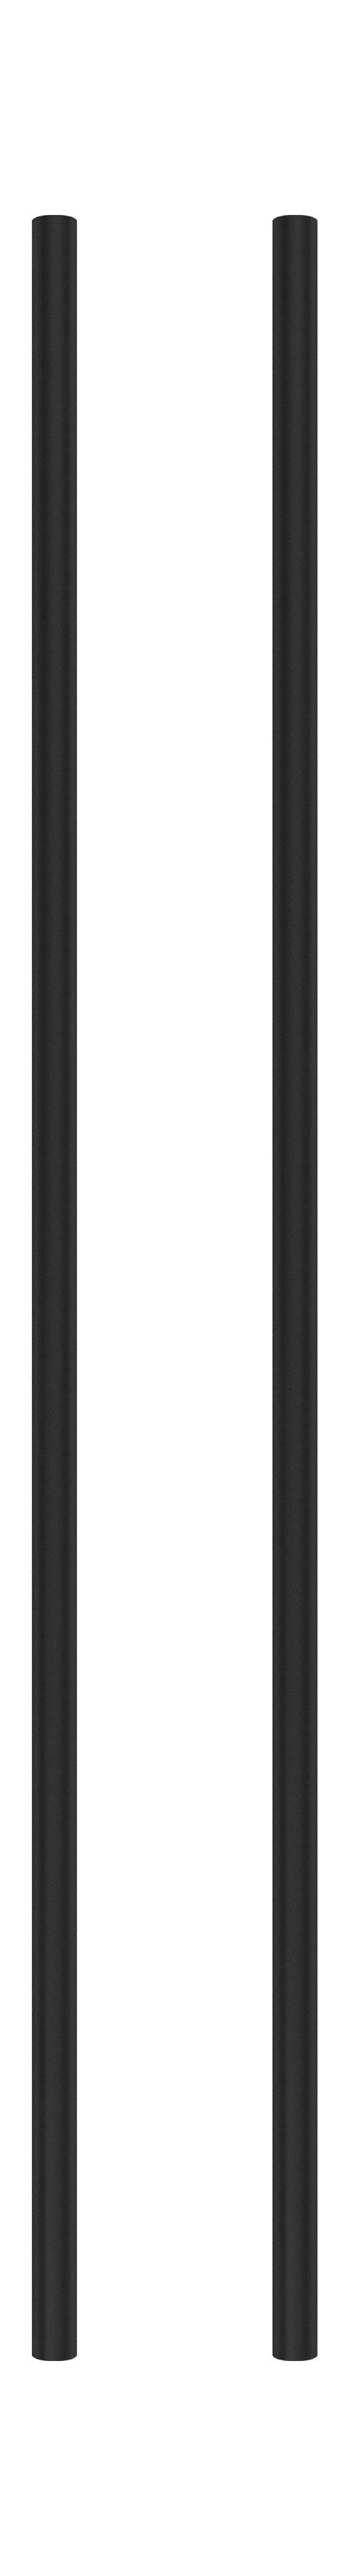 Moebe Shelving System/Wall Shelving Leg 85 Cm Black, Set Of 2